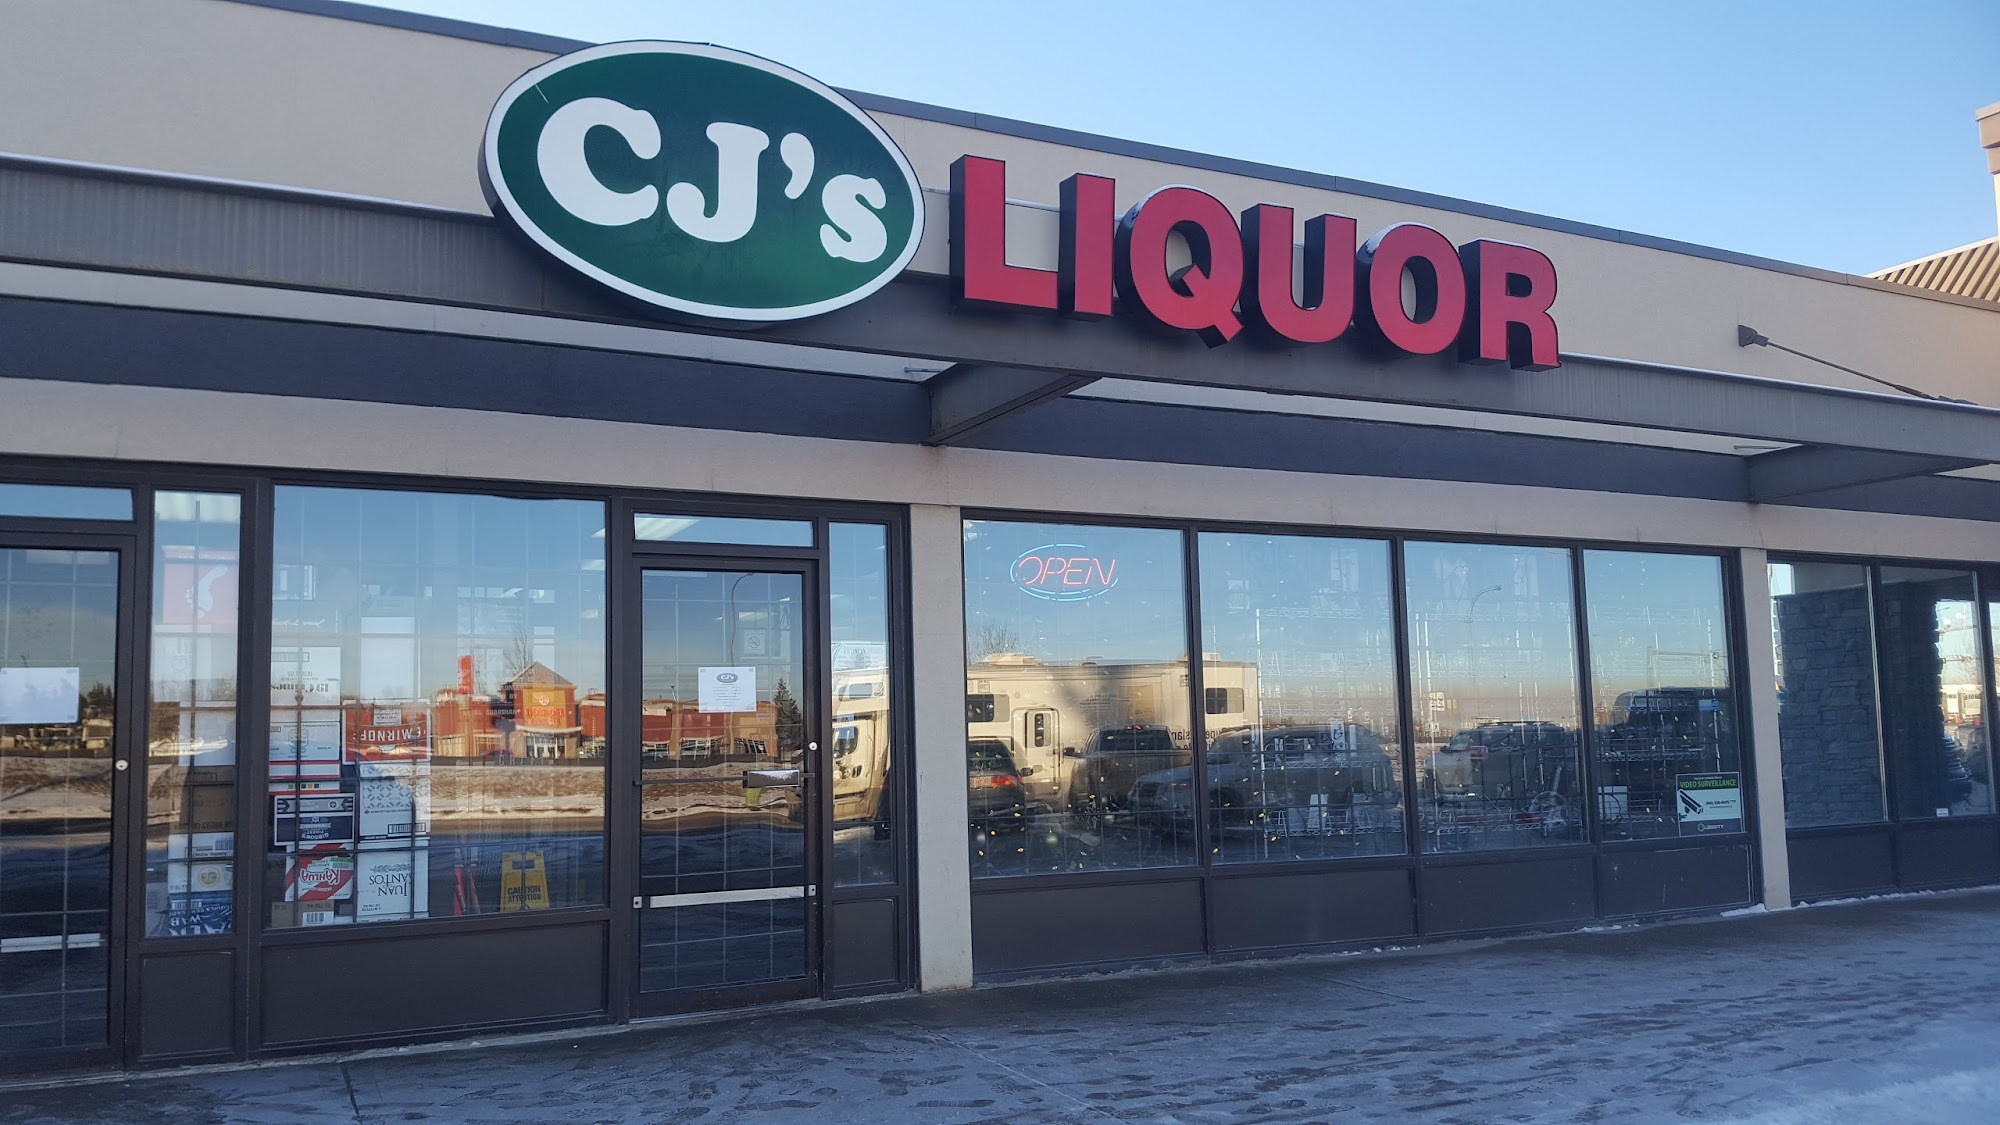 CJ's Liquor Unlimited